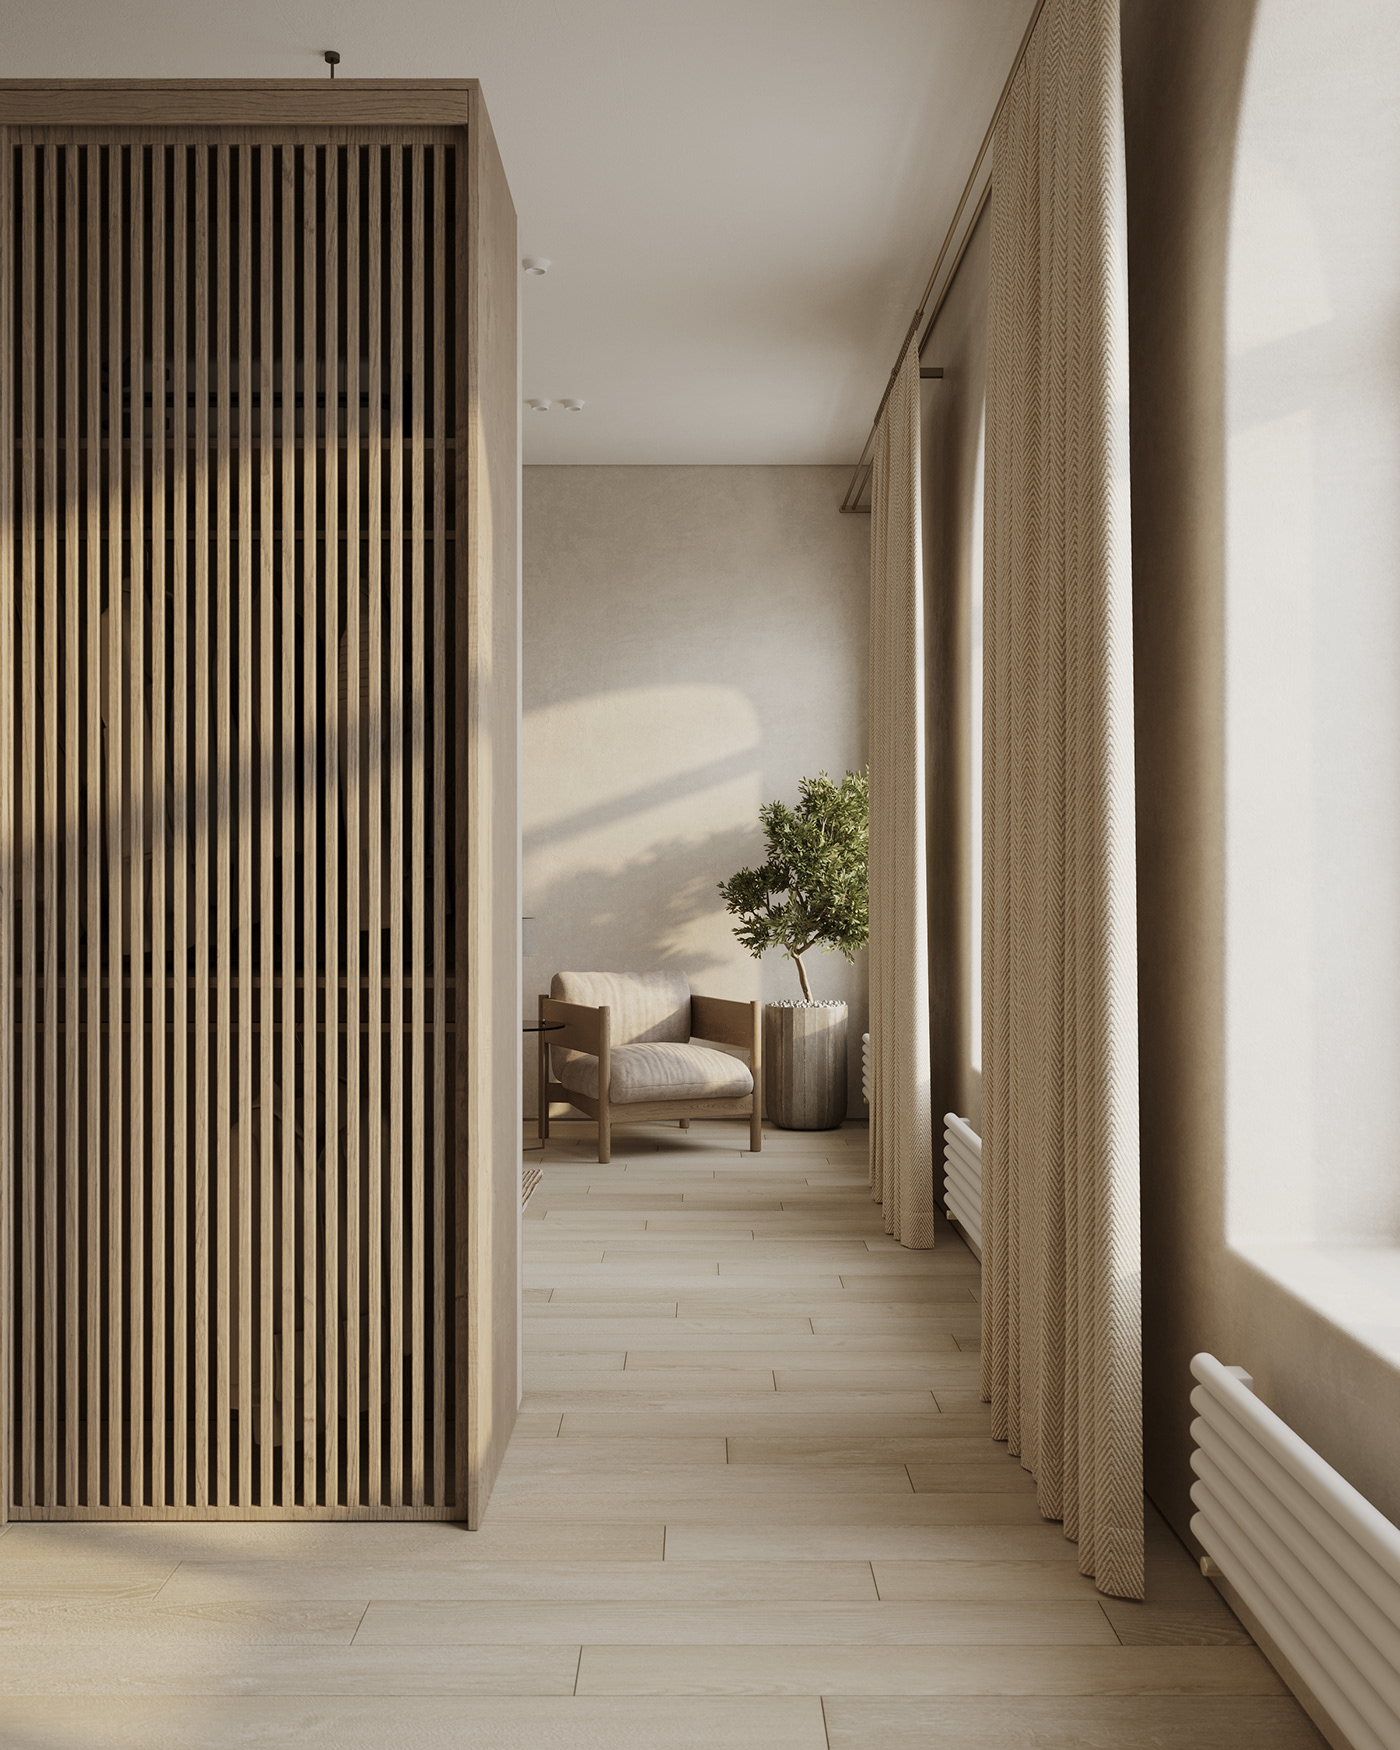 3ds max archviz bedroom CGI interior design  Japandi minimalist Nature visualization Wabisabi